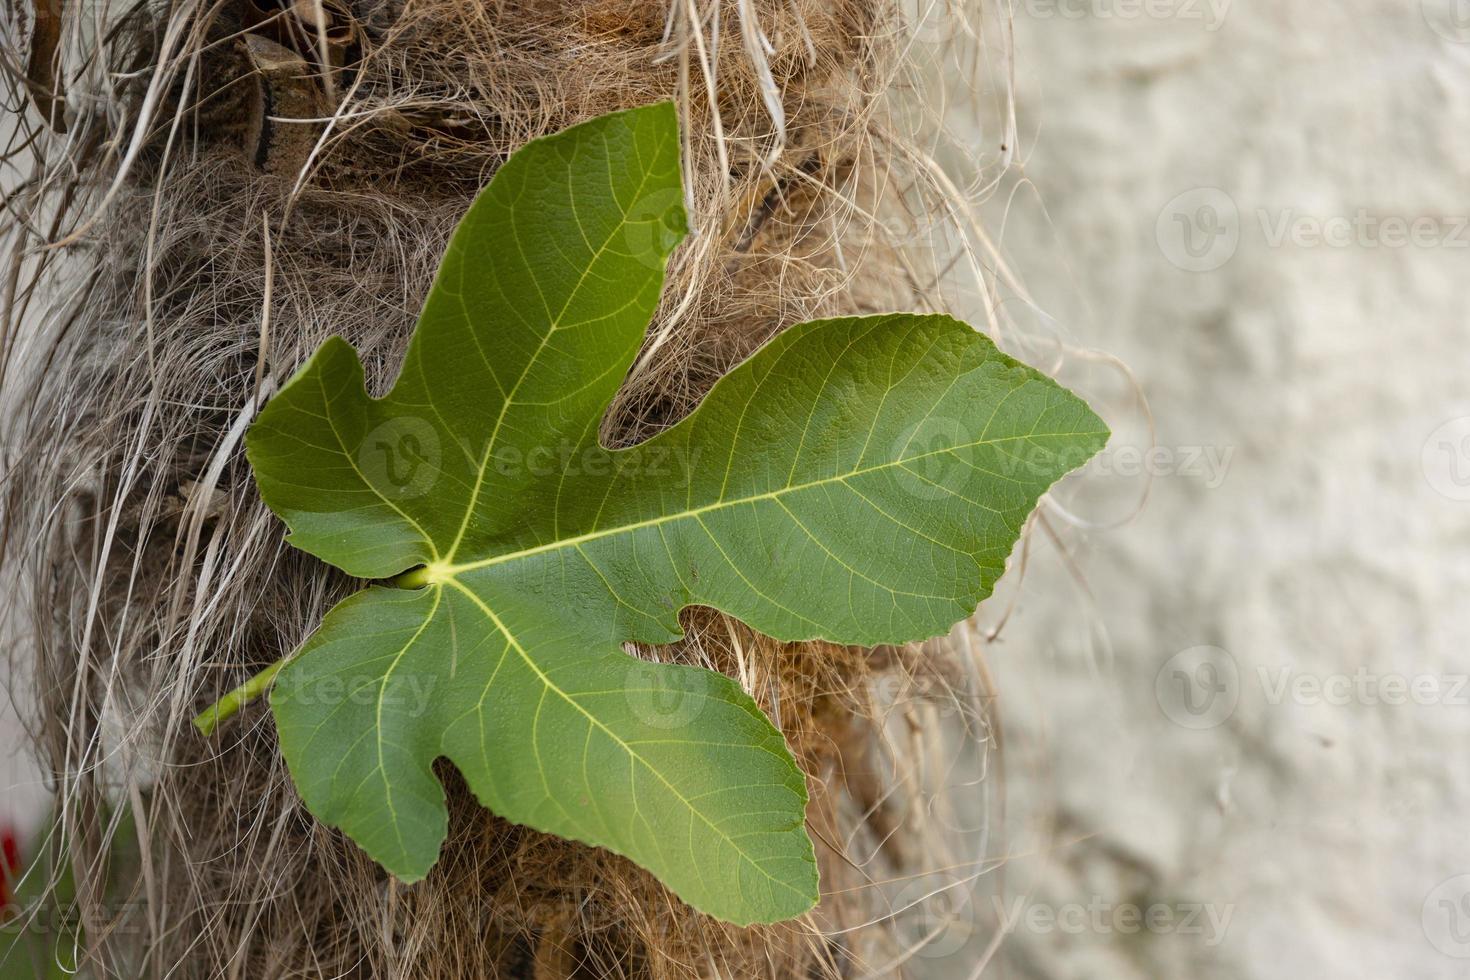 Green fig leaf on the trunk of a palm tree, a symbol of fertility, abundance, photo